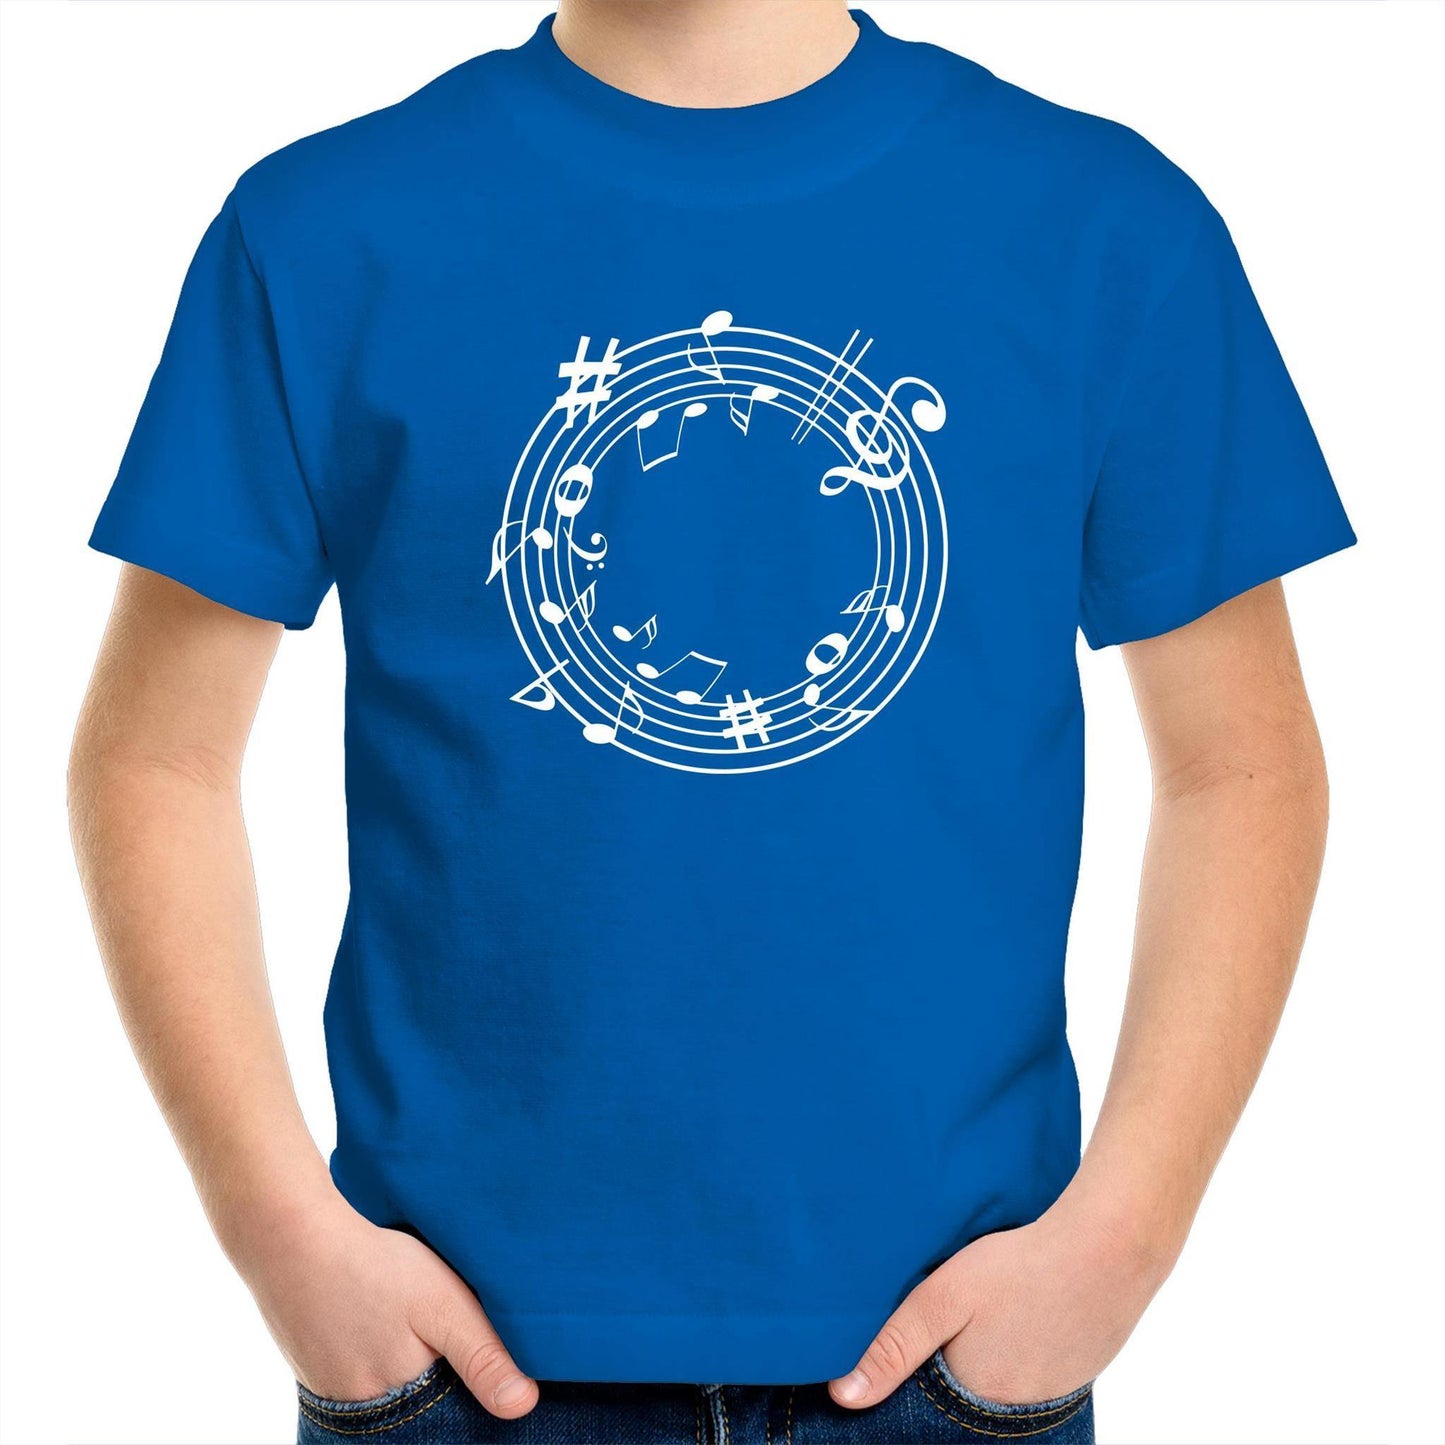 Music Circle - Kids Youth Crew T-Shirt Bright Royal Kids Youth T-shirt Music